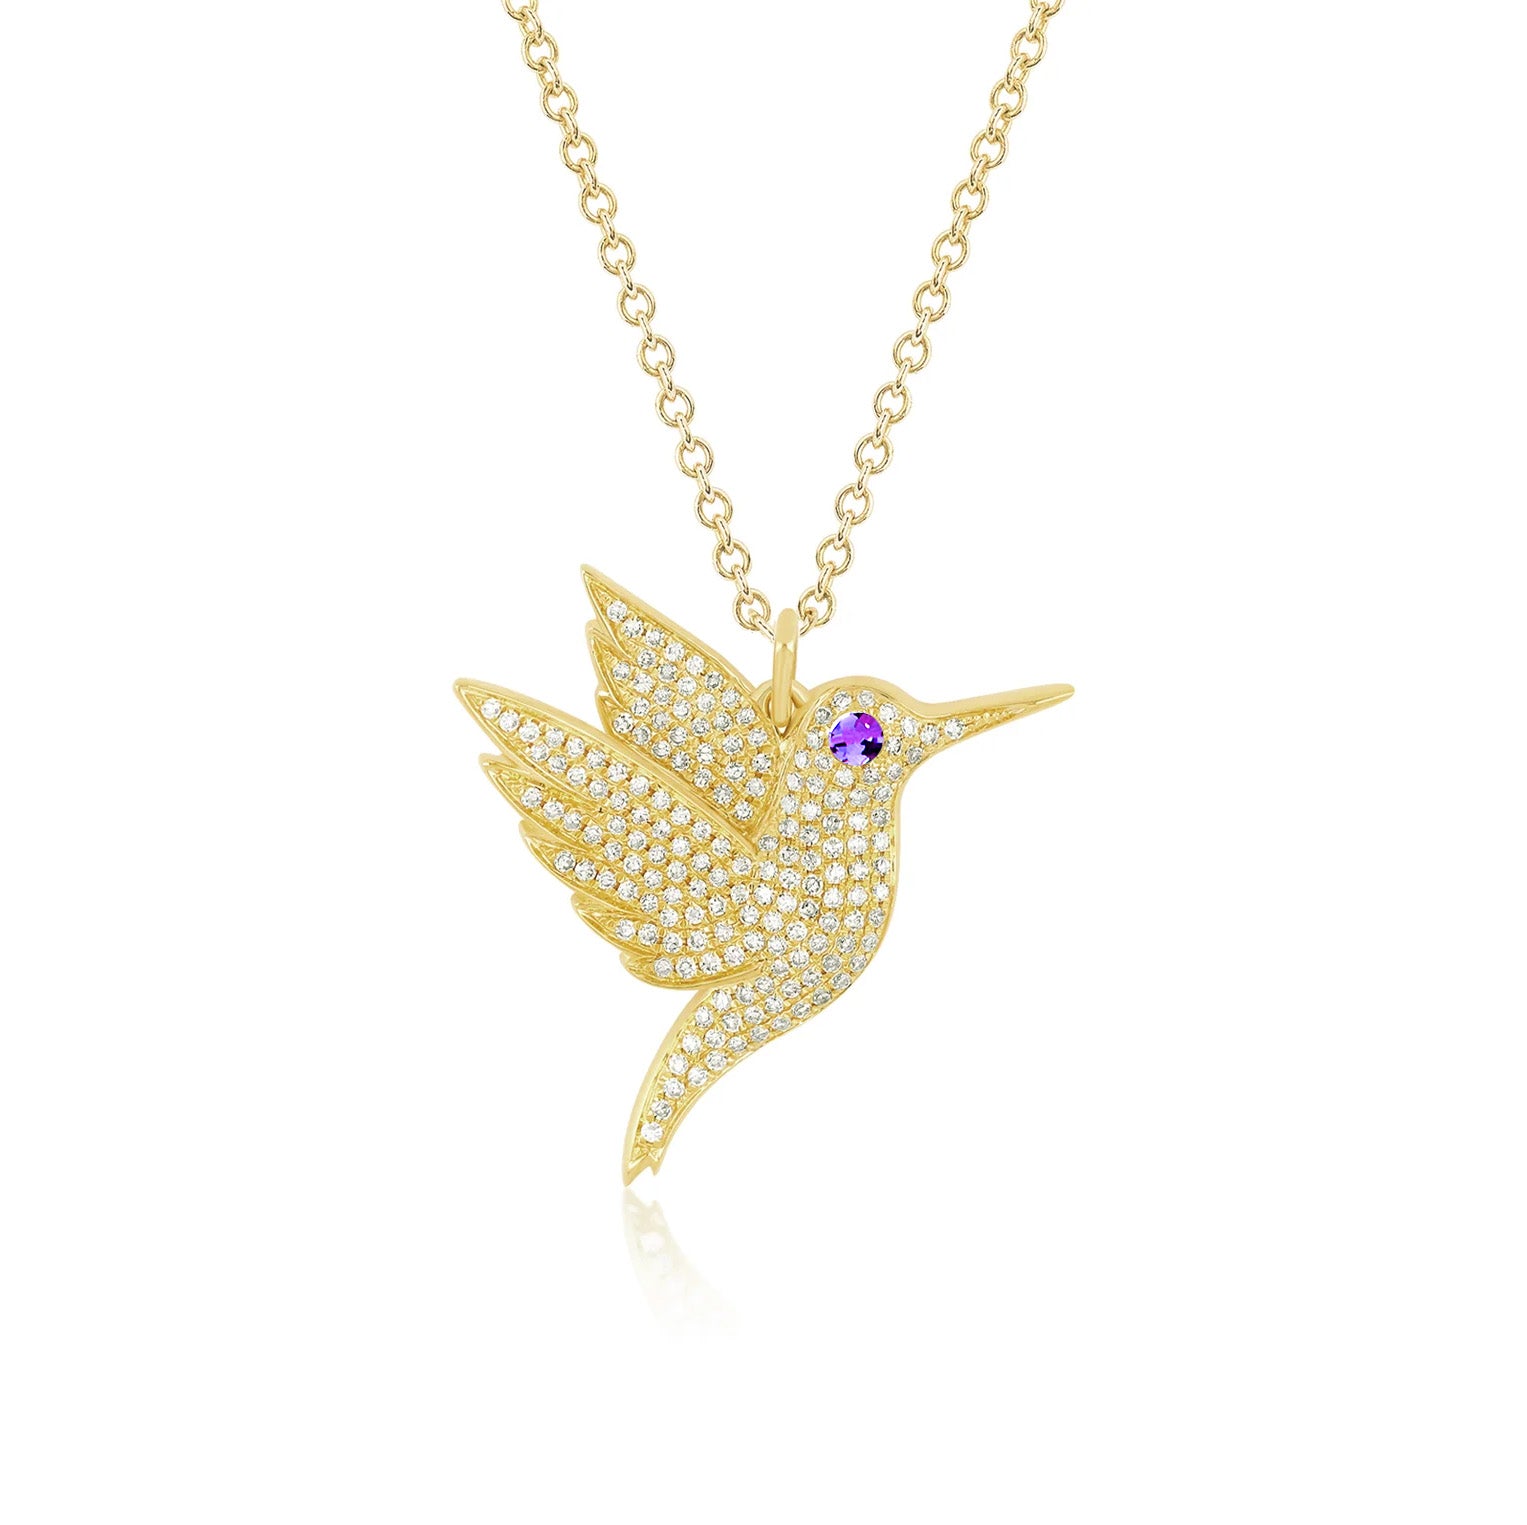 Pavé Diamond Hummingbird Necklace in 14k yellow gold with purple amethyst birthstone eye